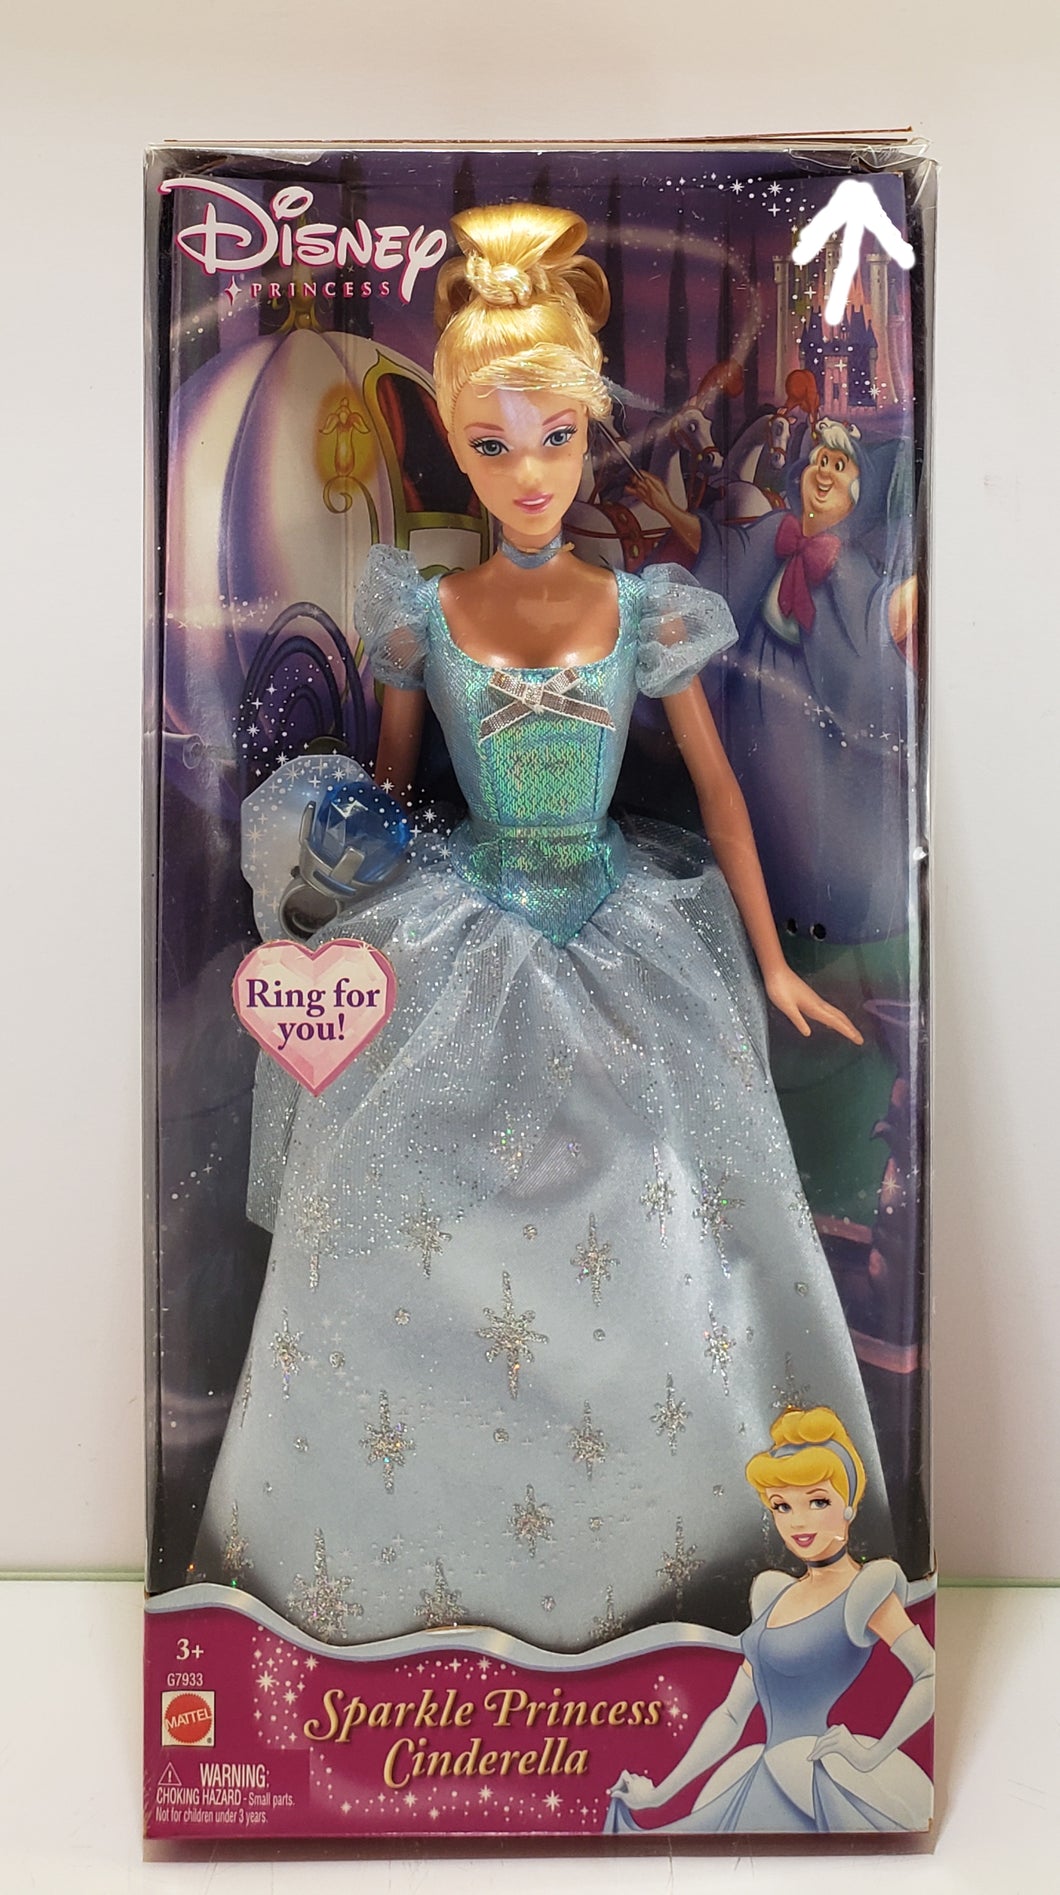 Disney Sparkle Princess Cinderella Barbie with Ring